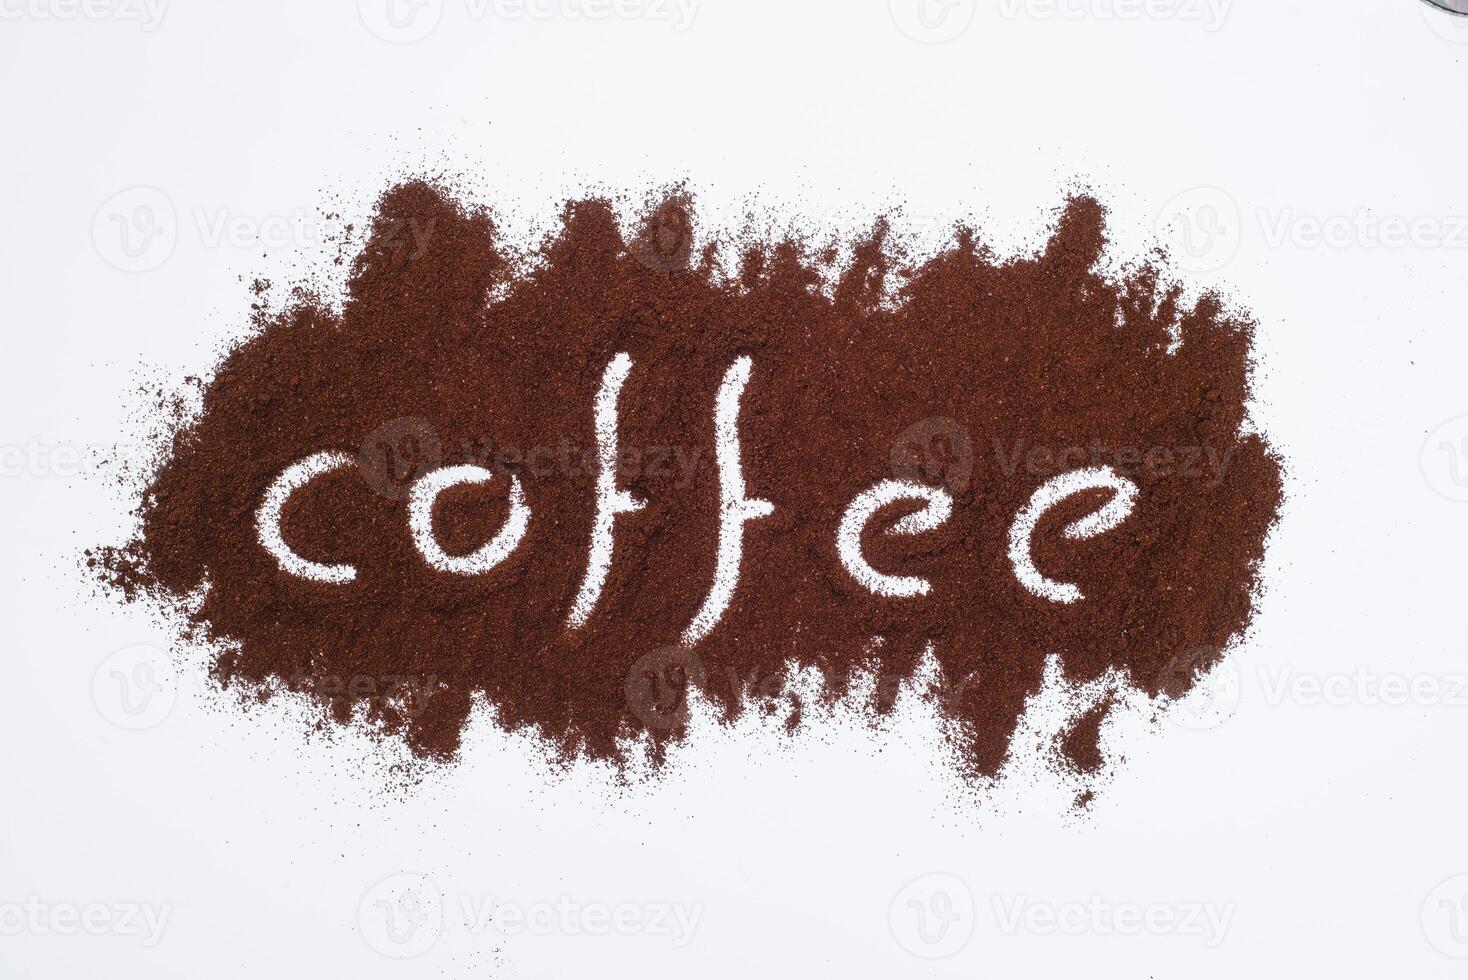 kaffe ord skriven på jord kaffe lager, vit bakgrund foto